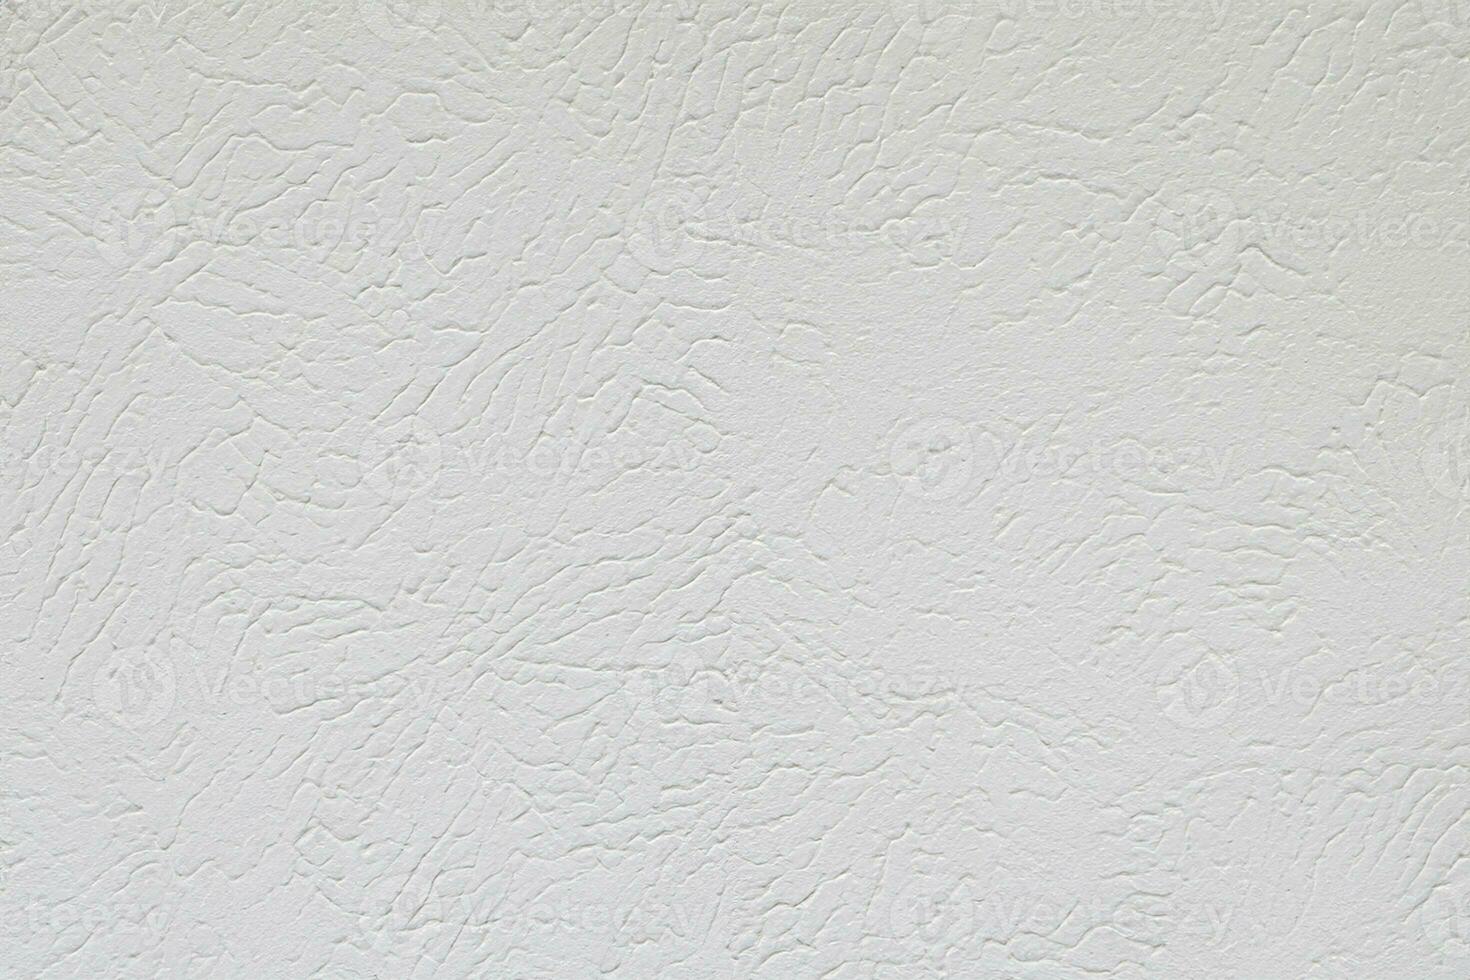 spons geschilderd, abstract getextureerde wit plafond achtergrond foto